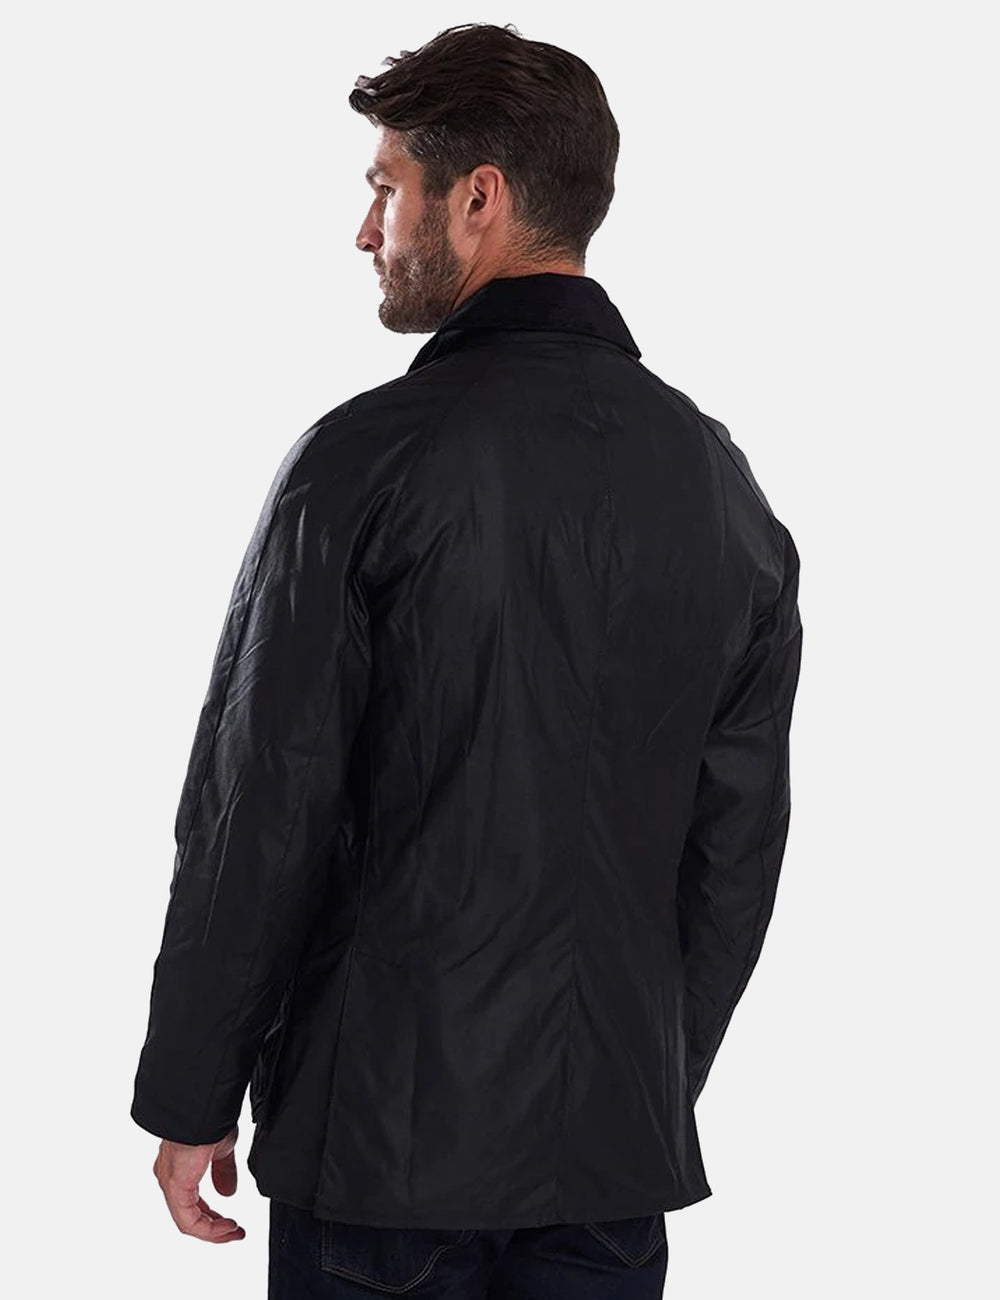 MO/WAX (ワックス) New urban jacket KHAKI WX-0296 Lサイズ - メンズ ...